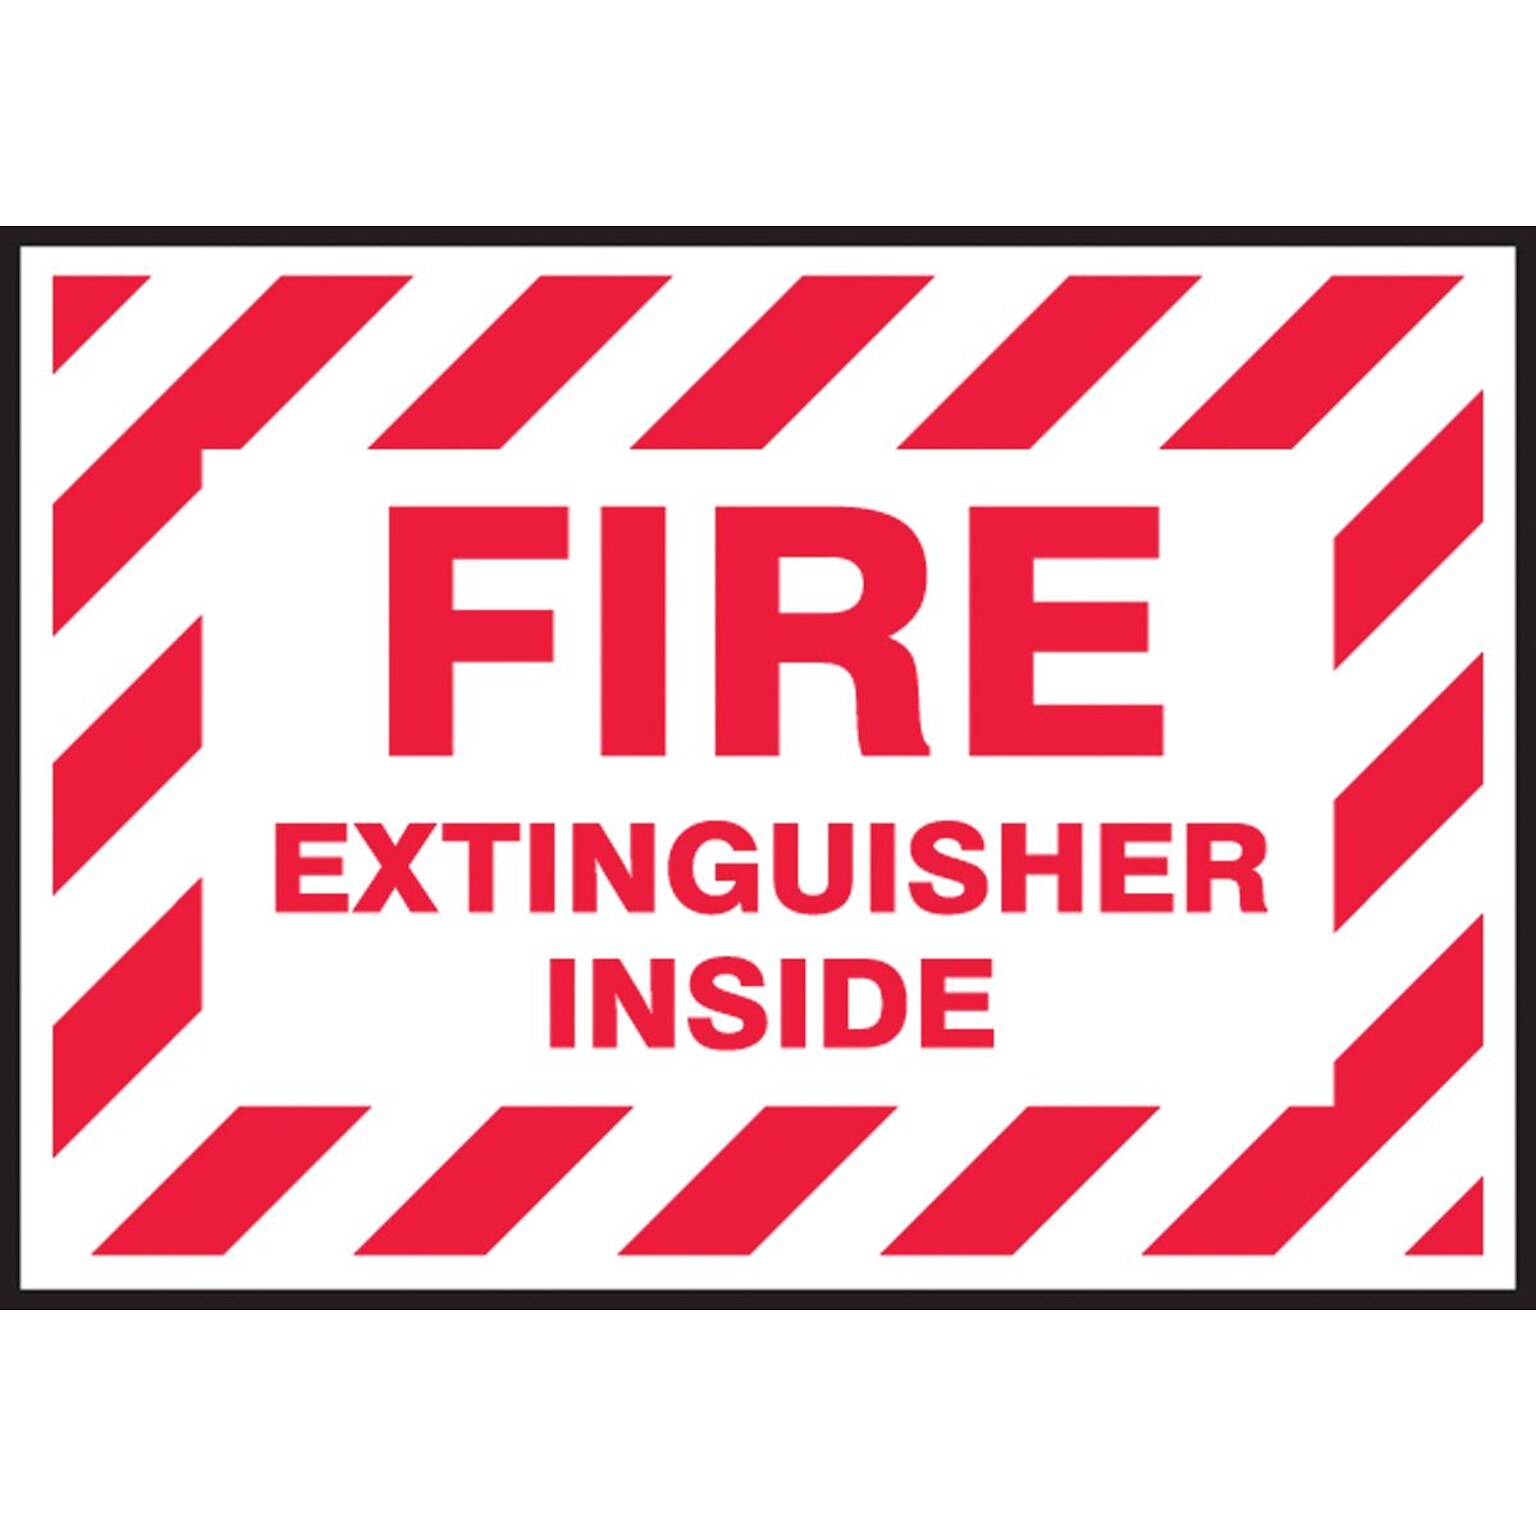 Accuform Safety Label, FIRE EXTINGUISHER INSIDE, 3 1/2 x 5, Adhesive Vinyl, 5/Pack (LFXG515VSP)